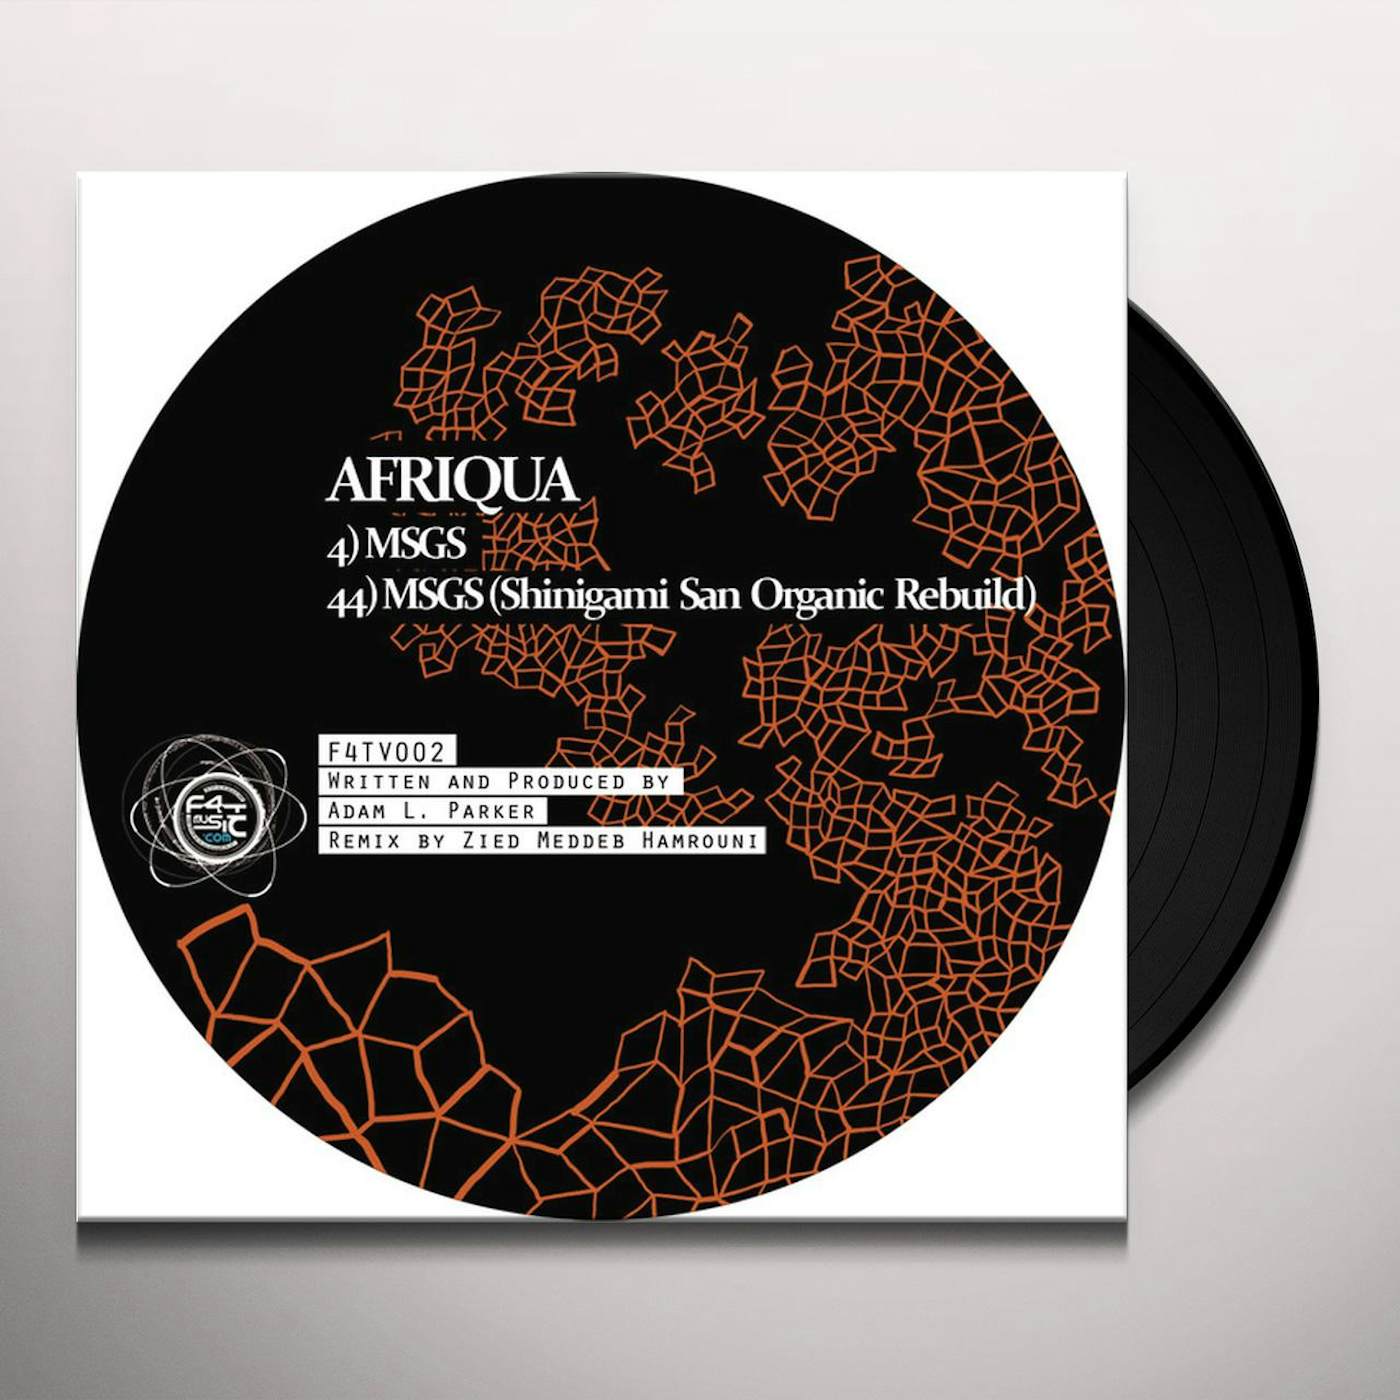 Afriqua MSGS Vinyl Record